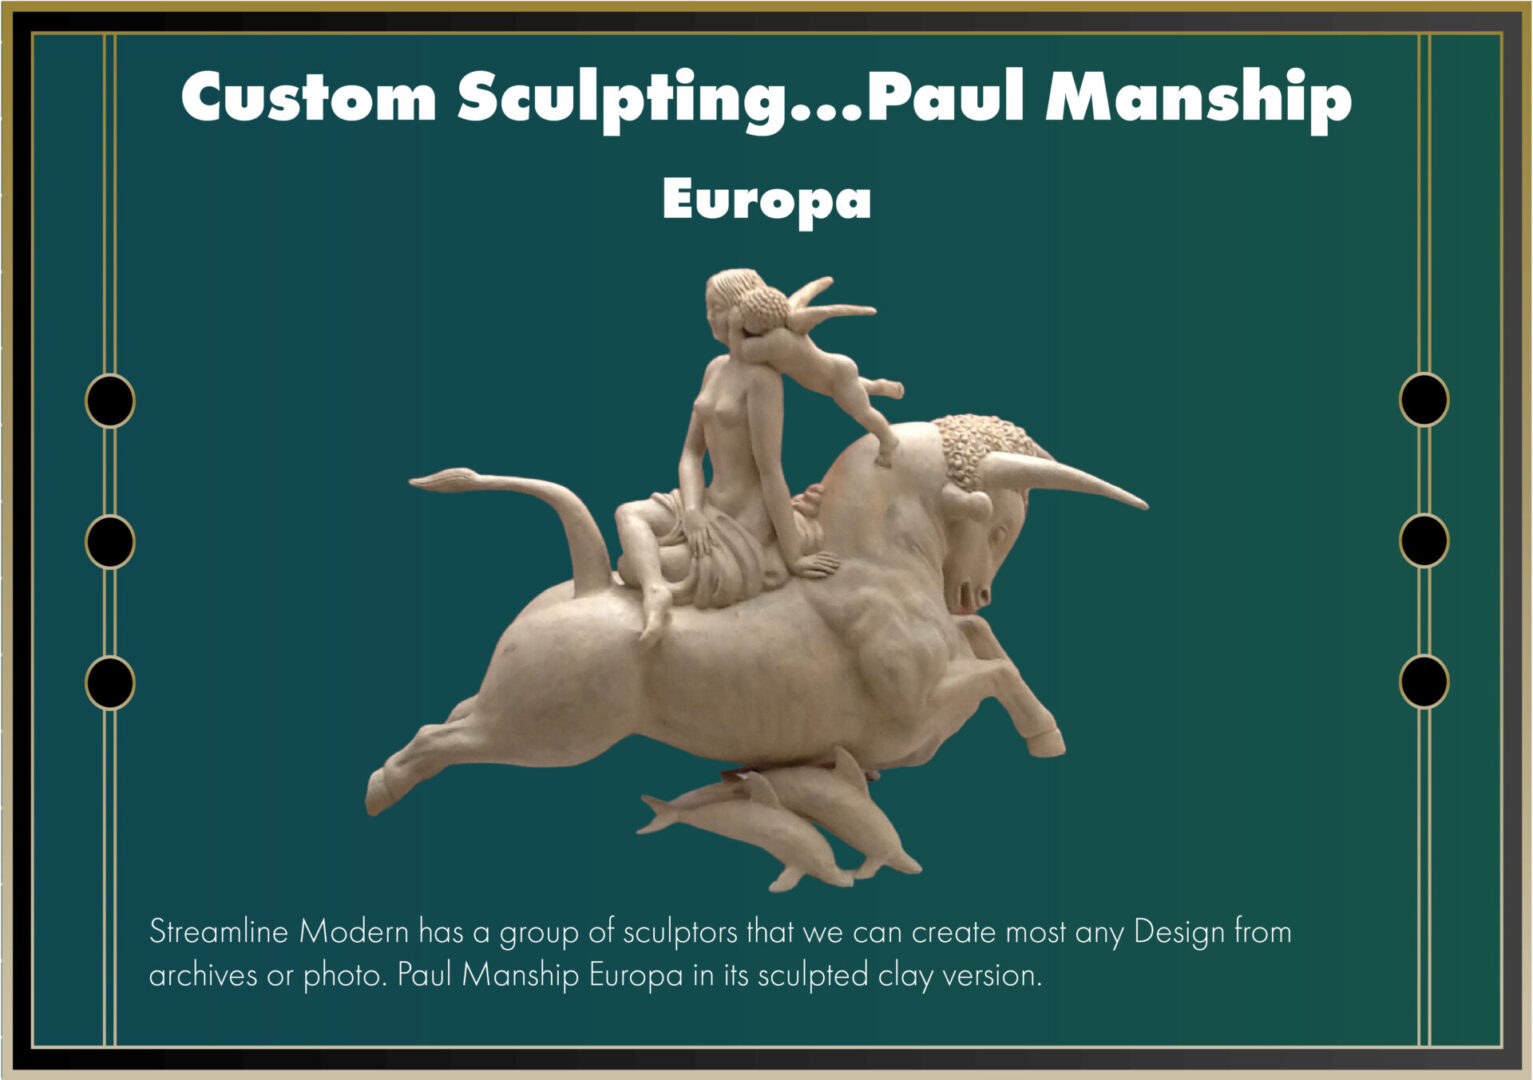 Custom Sculpture named Europa created by Paul Manship